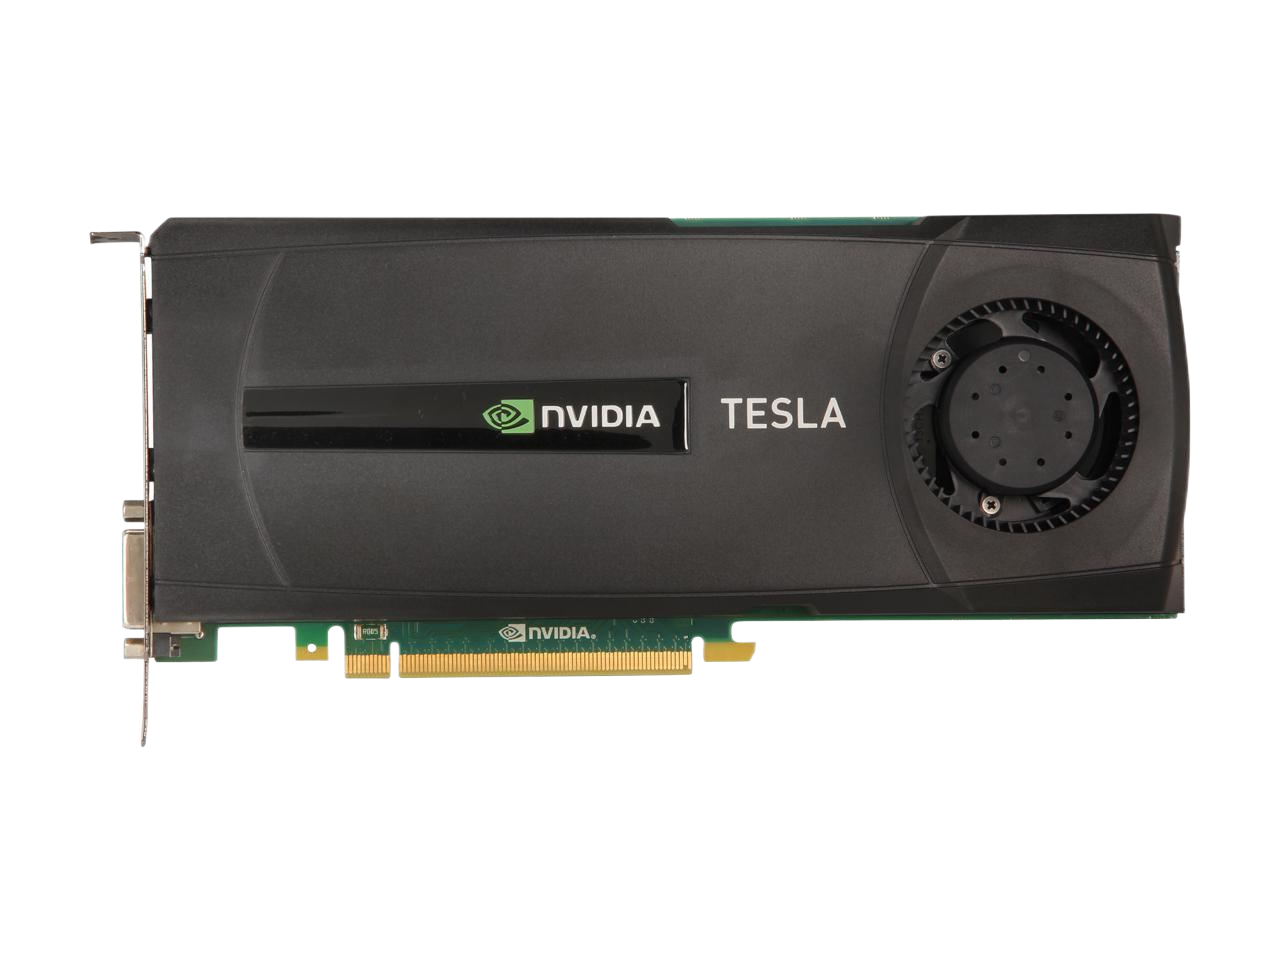 NVIDIA Tesla M2090 6GB GDDR5 PCI Express x16 1.30 GHz Core Video Graphics Card 699-21030-0214-202